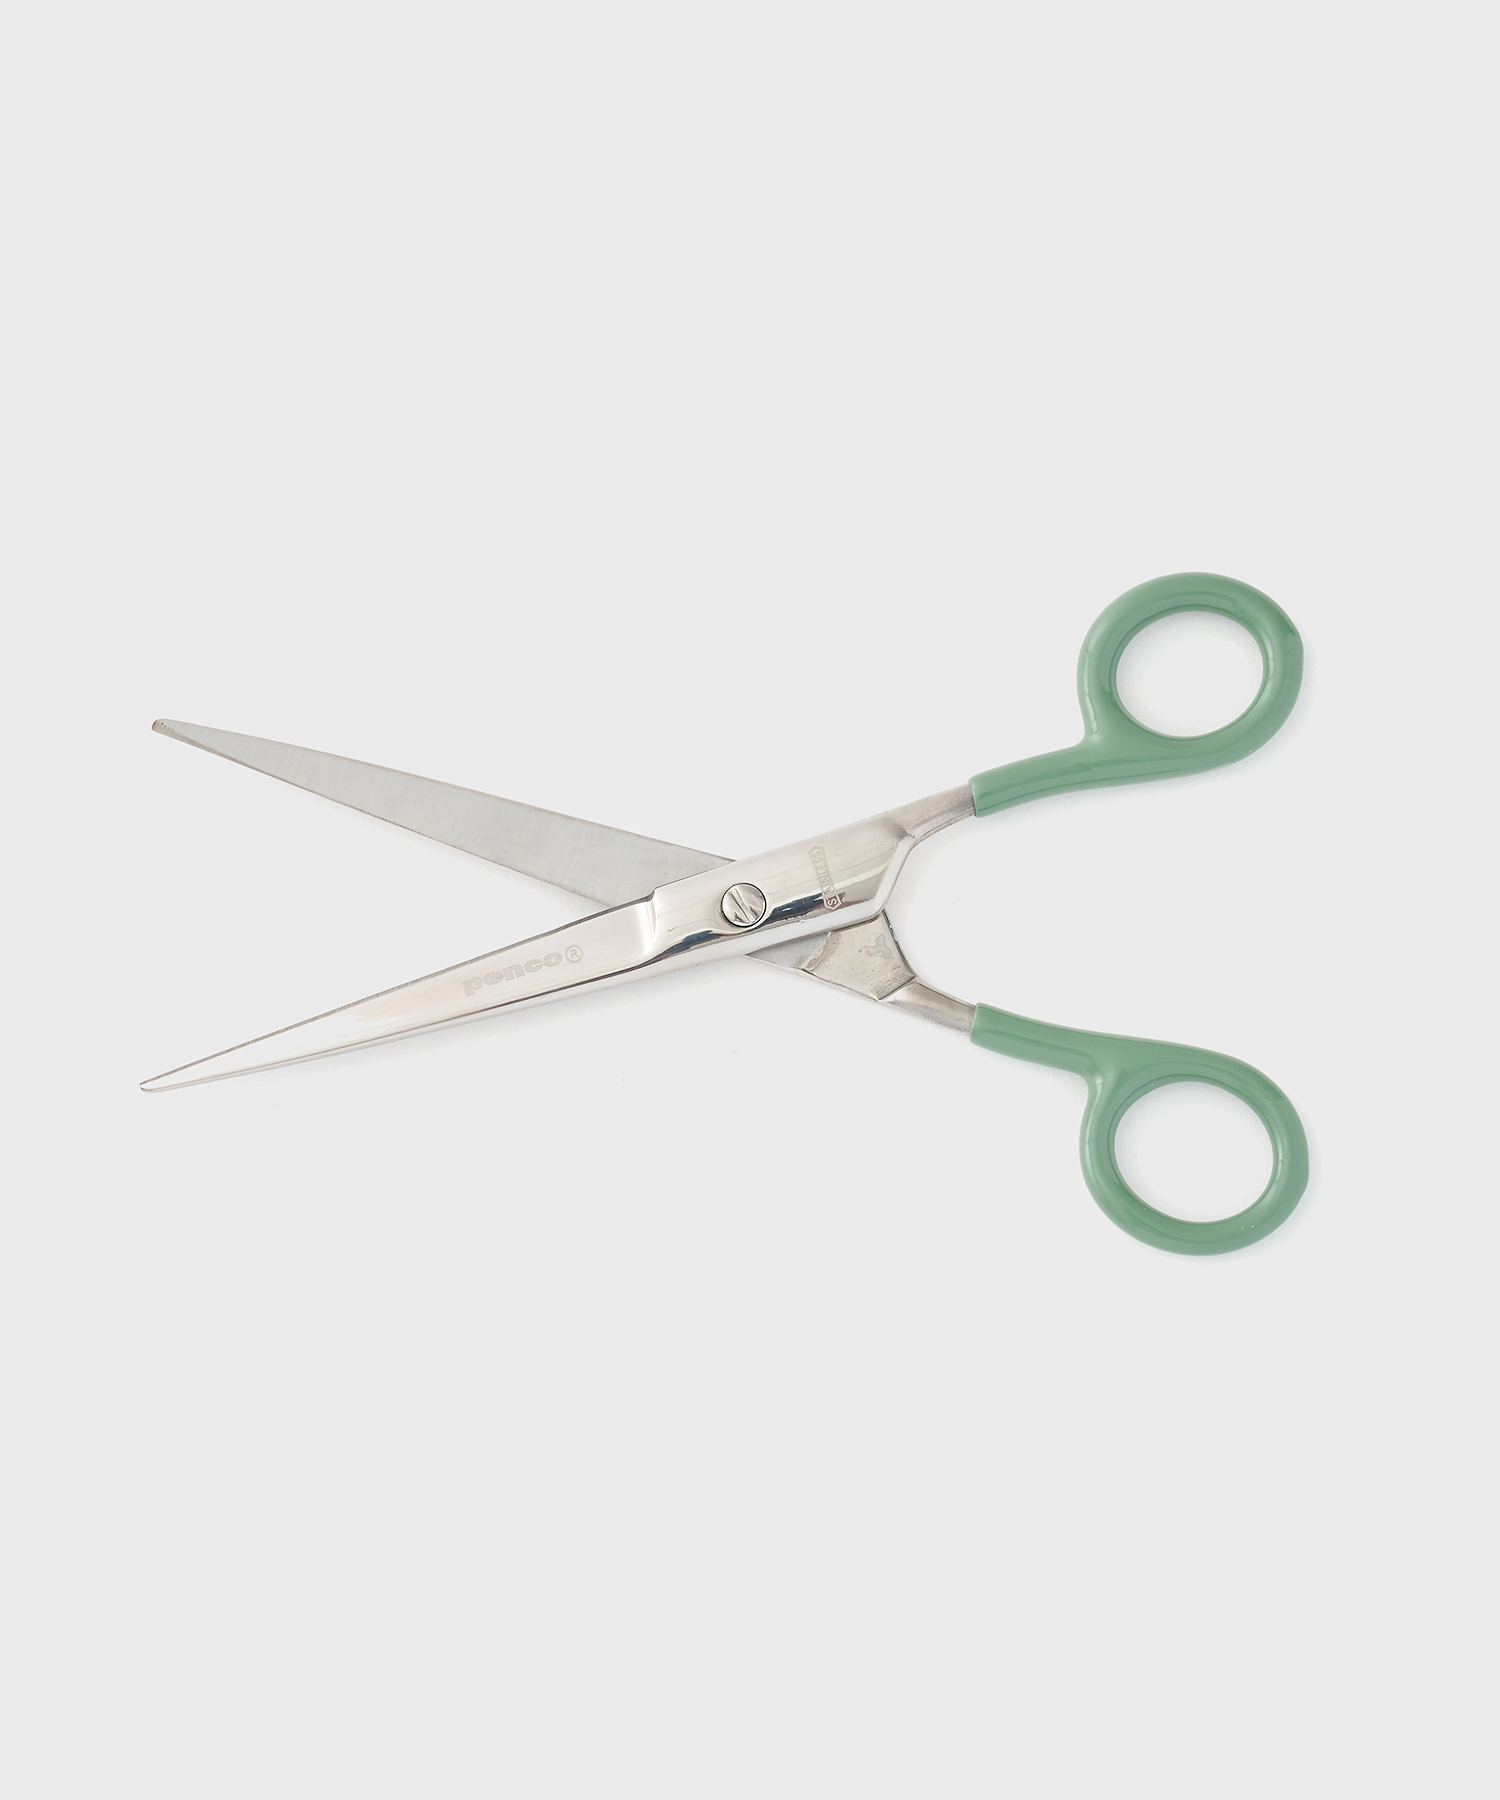 Penco Stainless Scissors L (Green)